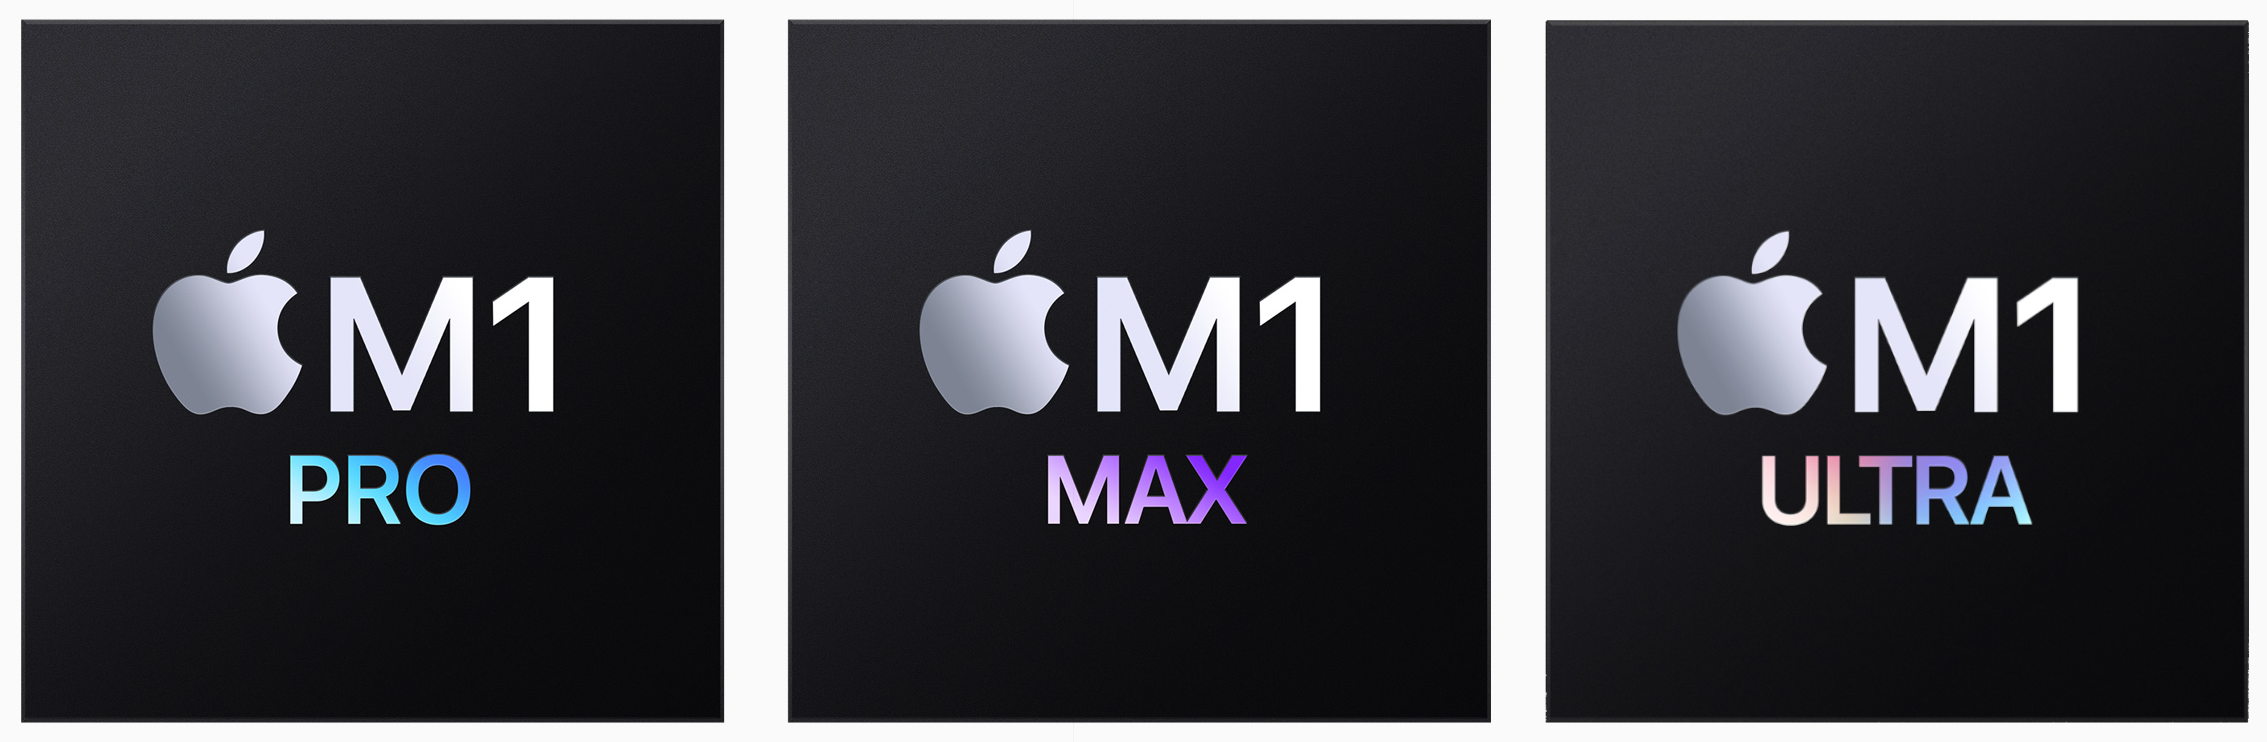 Apple M1 Pro Apple M1 Max Apple M1 Ultra Chips